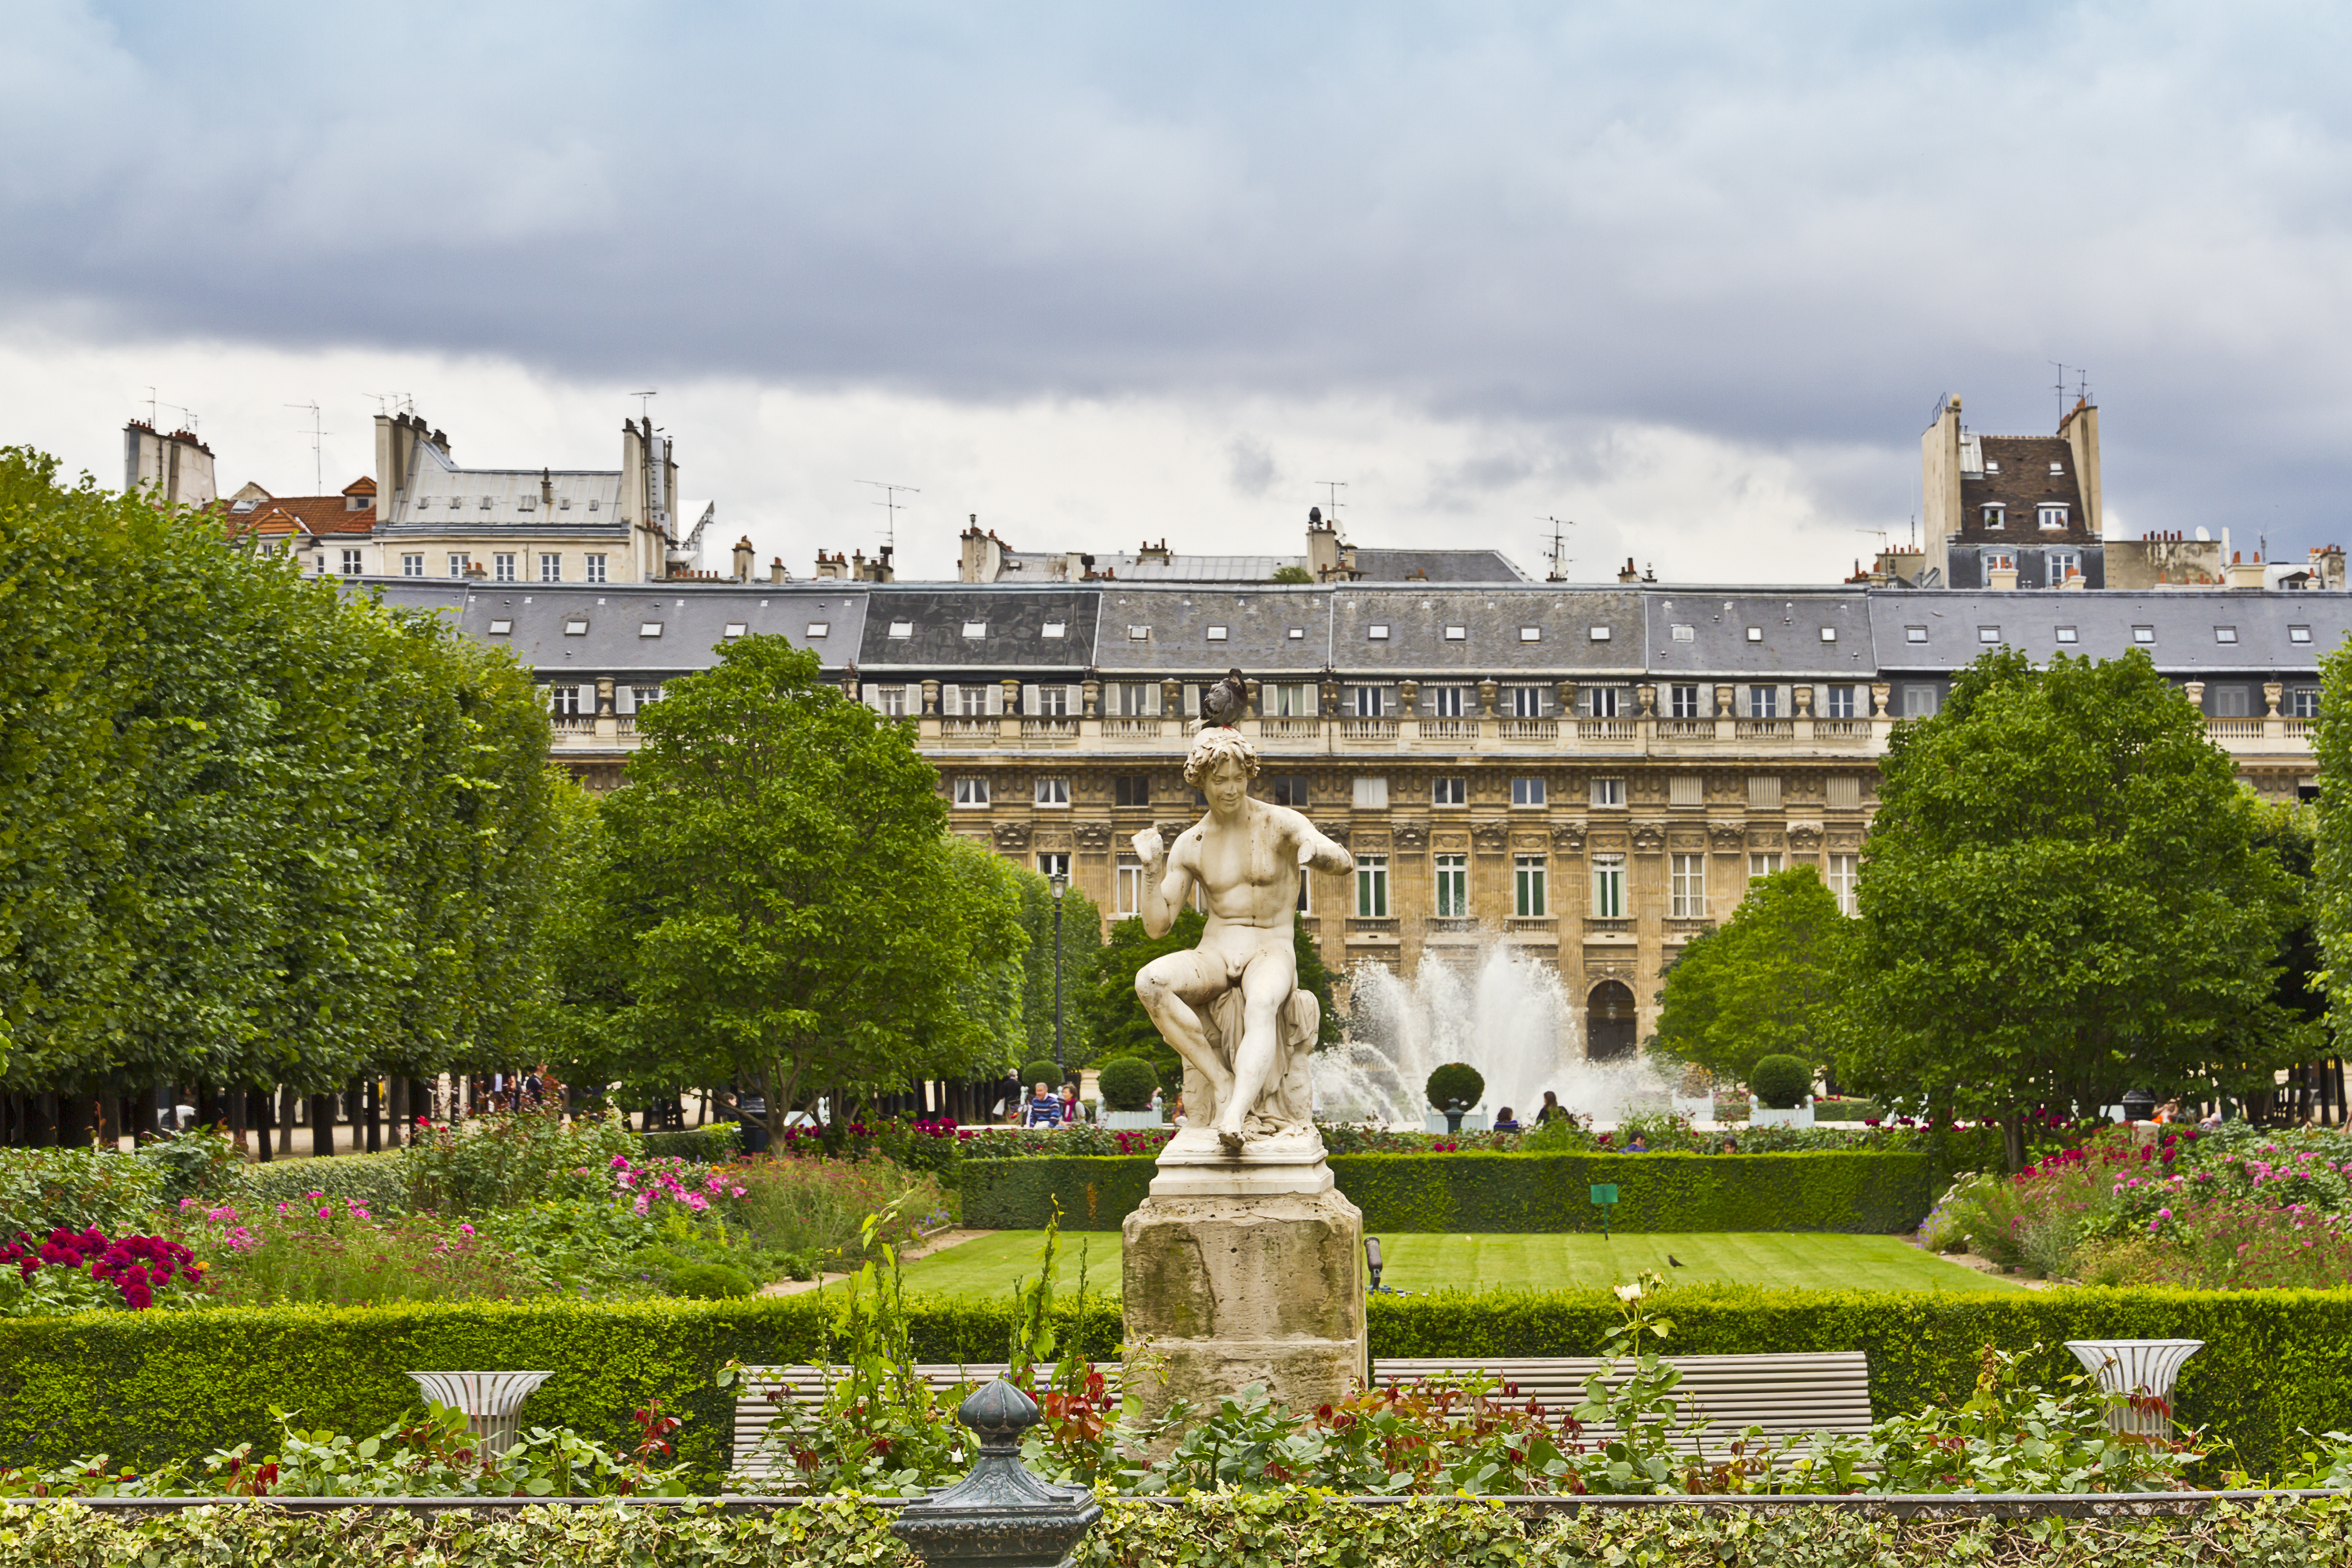 Taking a walk in Palais Royal Gardens